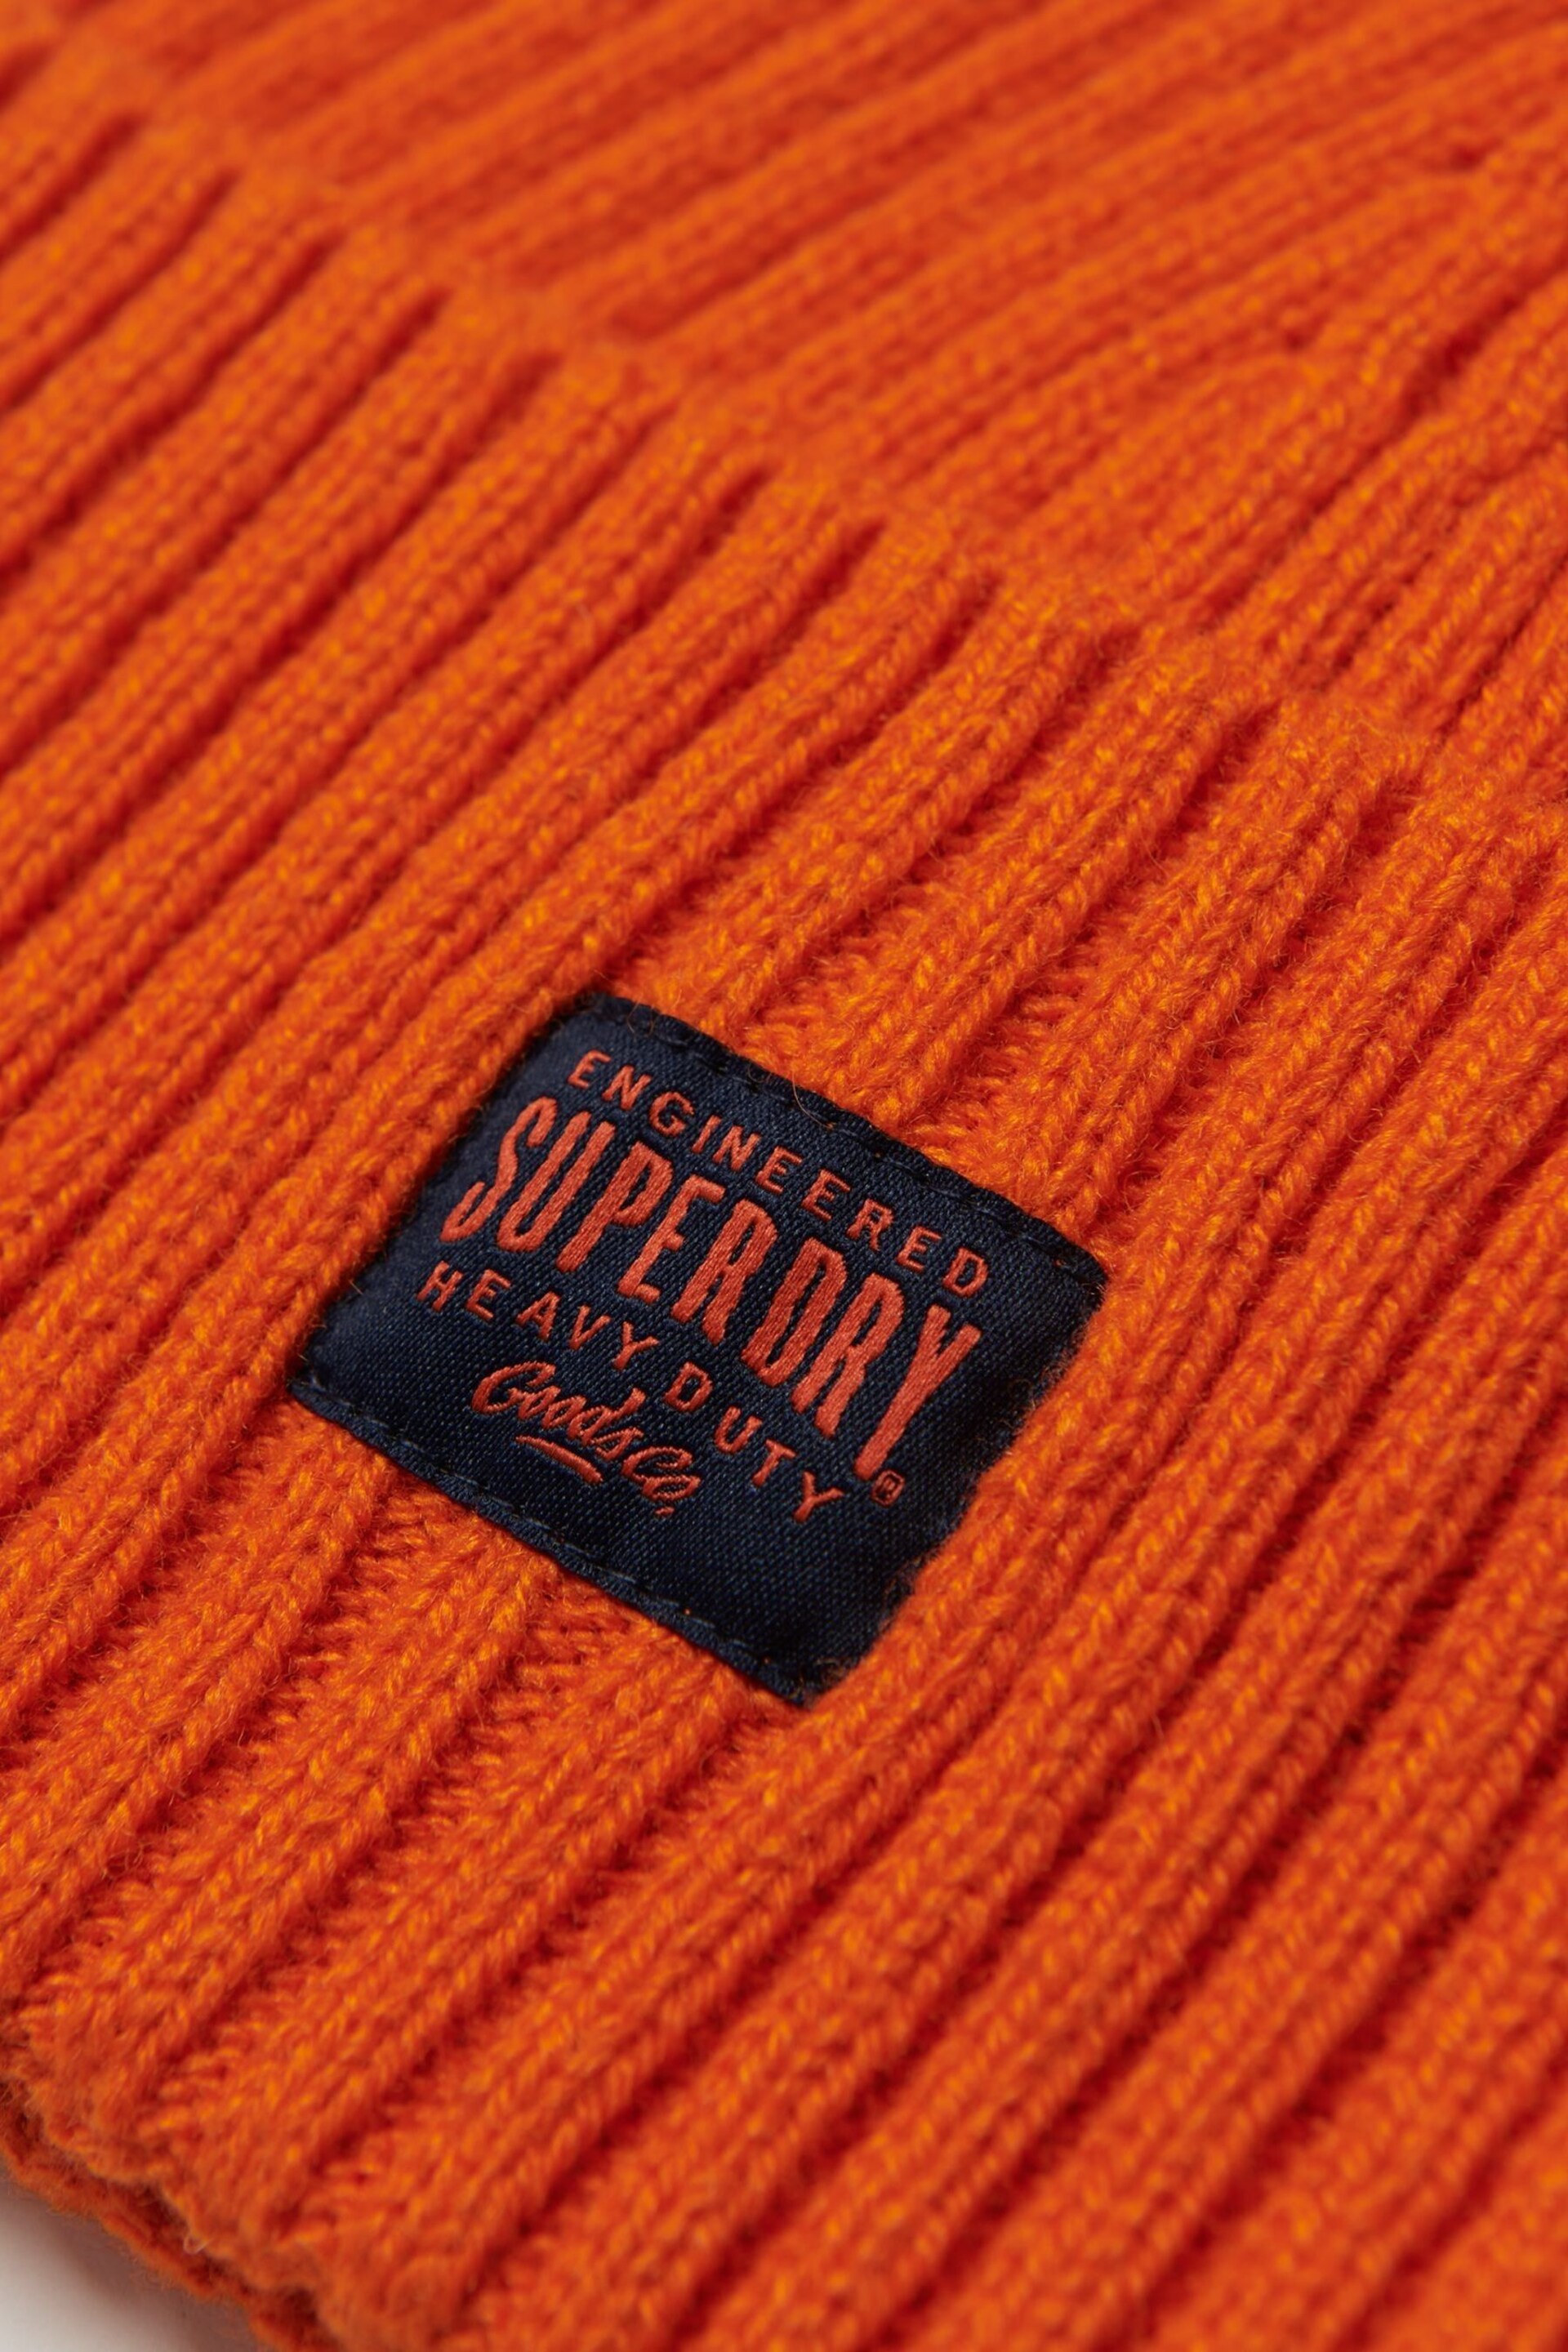 Superdry Orange Workwear Knitted Beanie - Image 2 of 3